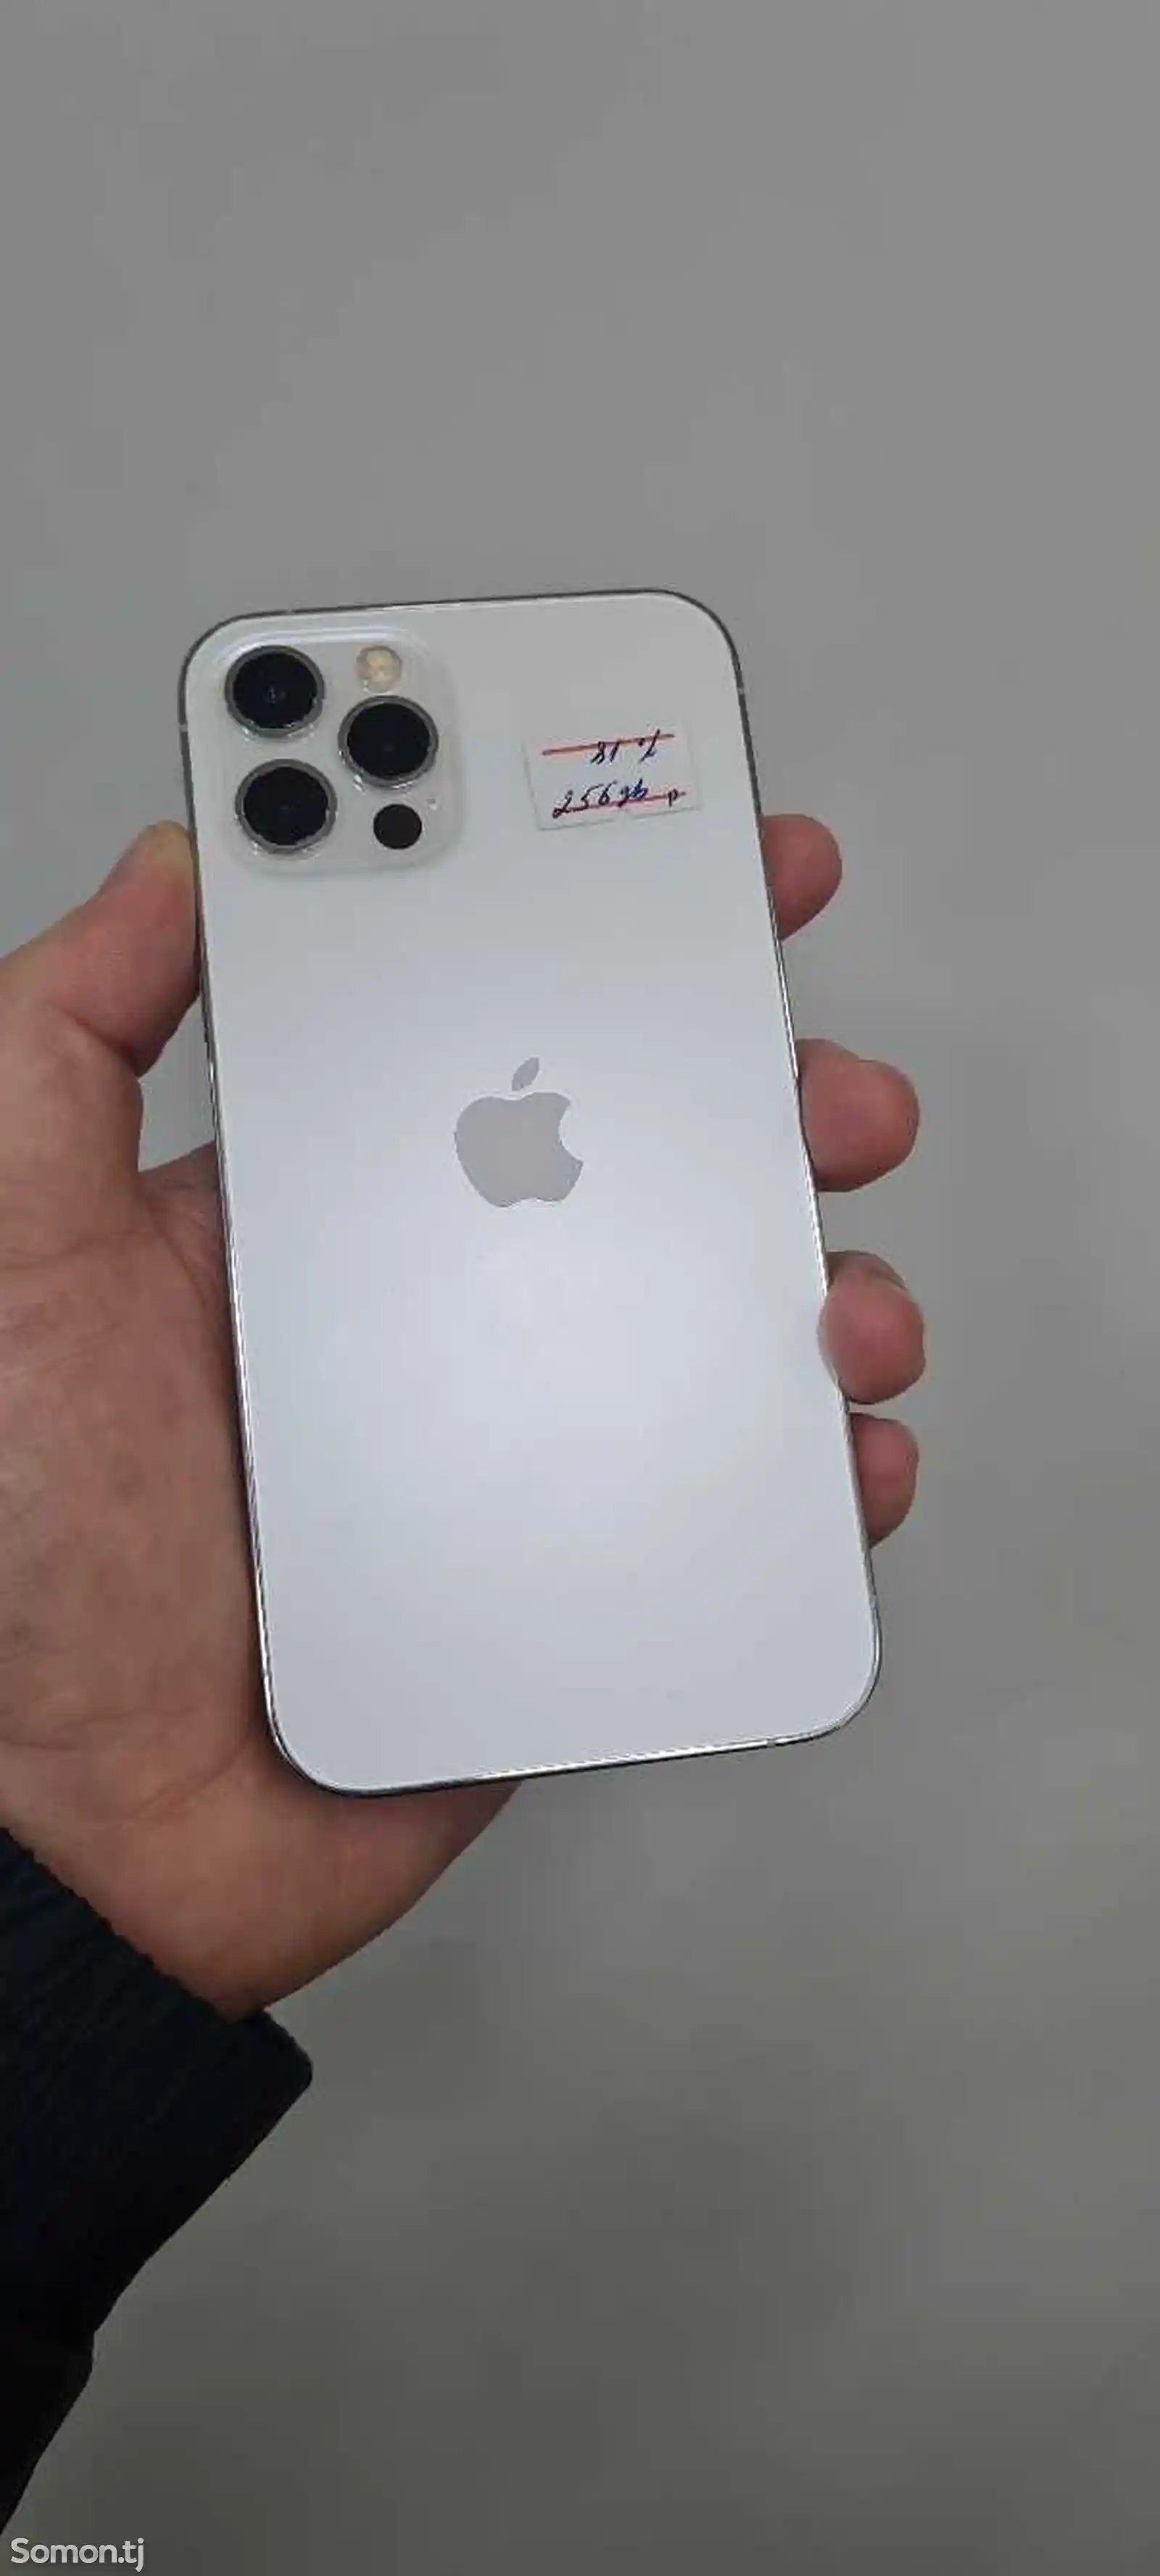 Apple iPhone 12 pro, 256 gb, Silver